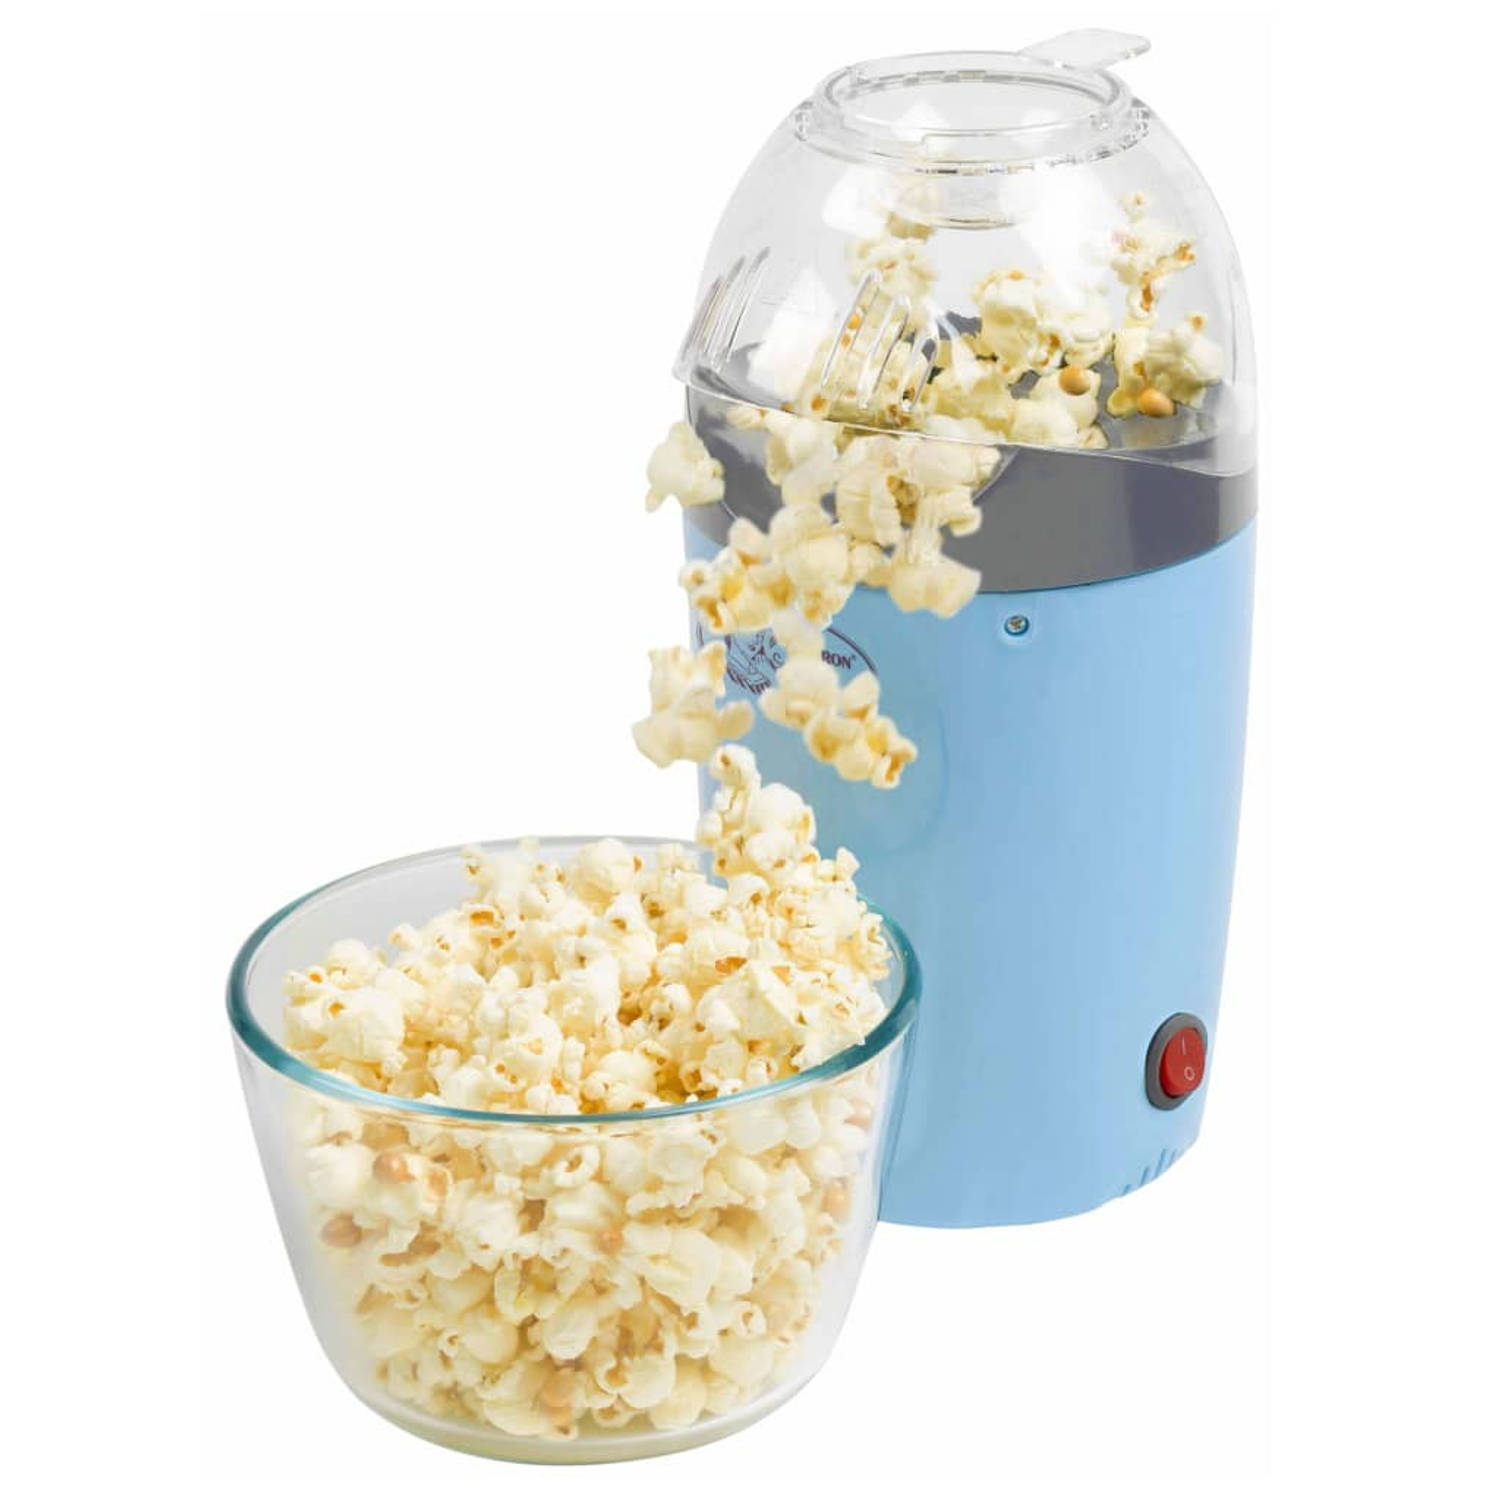 Uitgaan Verbazingwekkend Vroegst Bestron Popcornmaker APC1007 1200 W blauw | Blokker